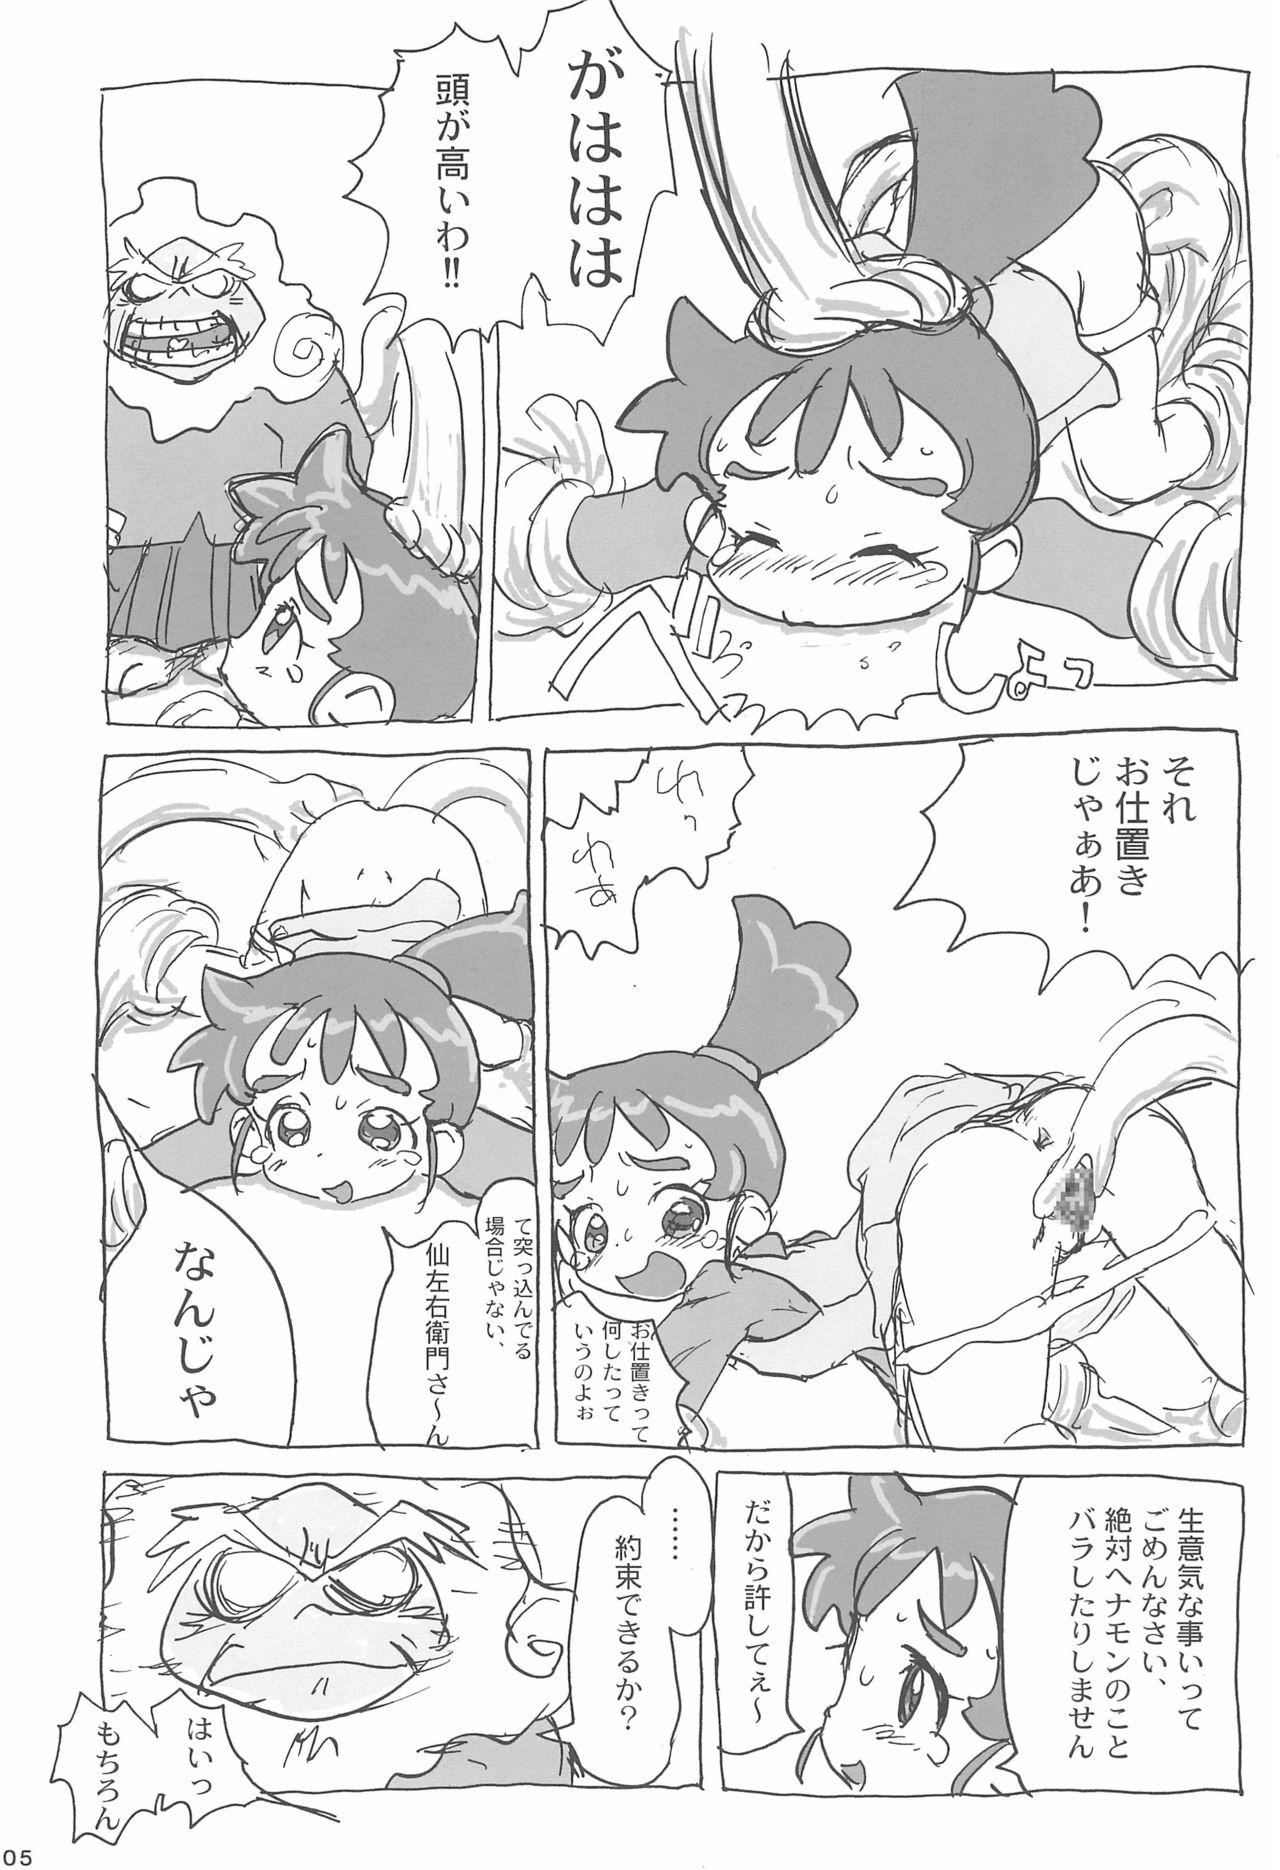 Chacal Ana no Hana - Kasumin Trimmed - Page 7